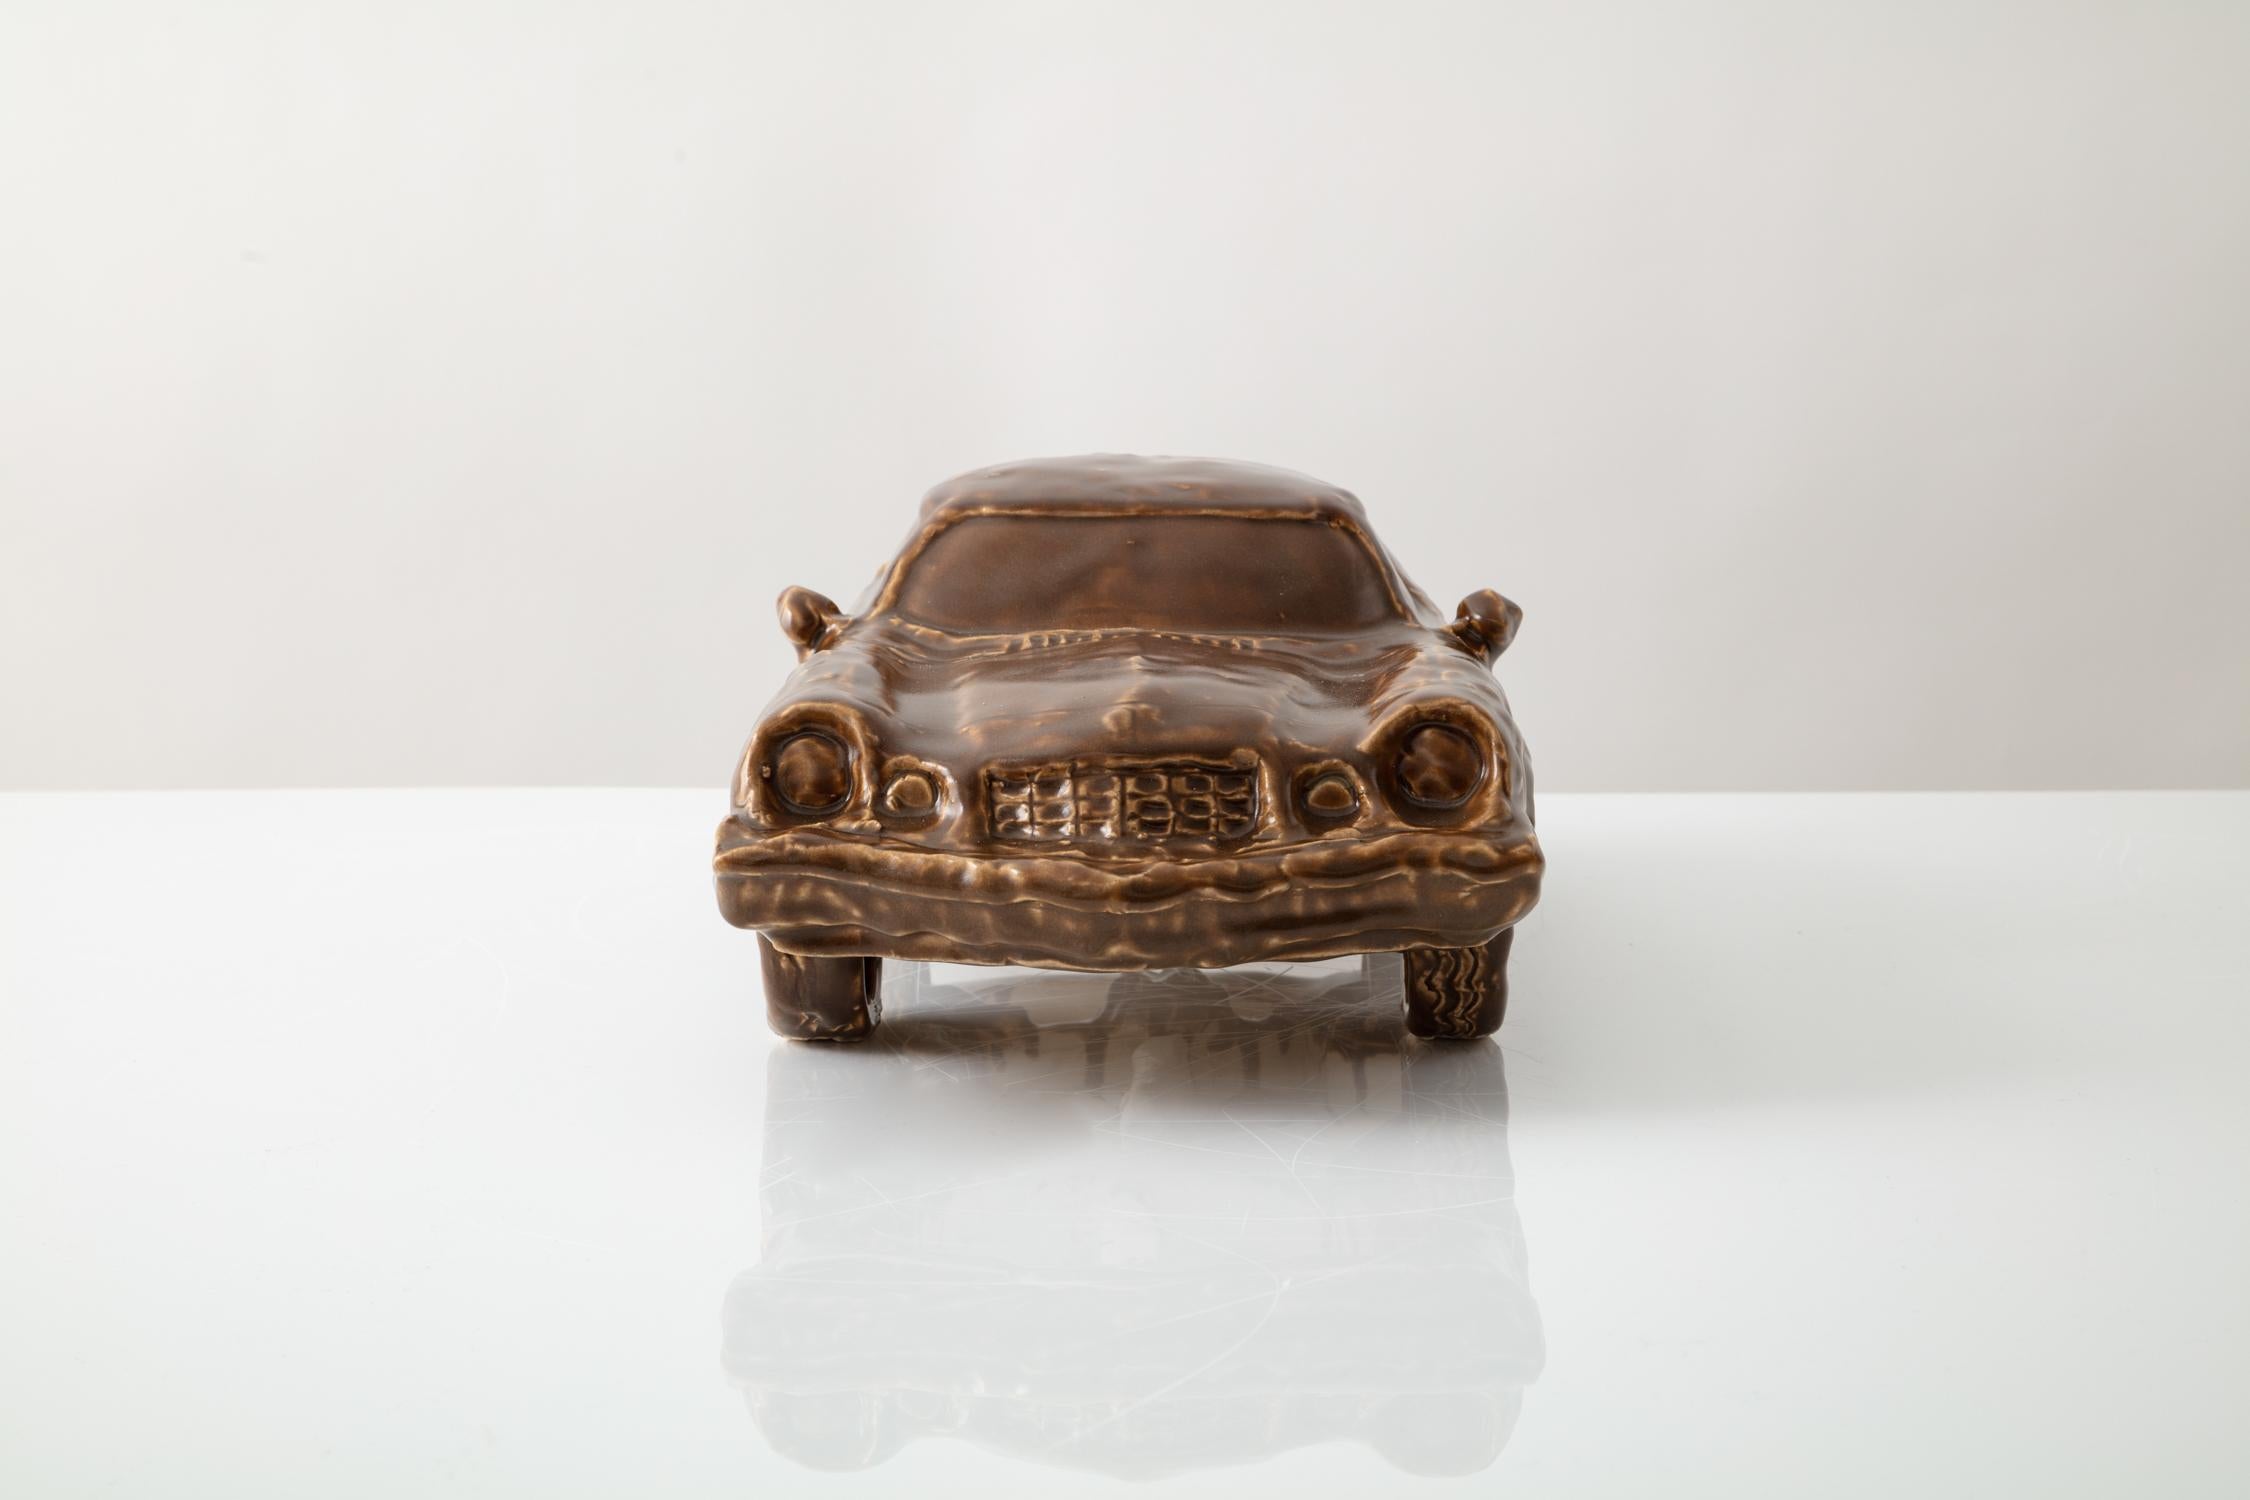 Vernissé Sculpture de voiture en céramique émaillée « Buckskin Camaro » (Buckskin Camaro) en vente